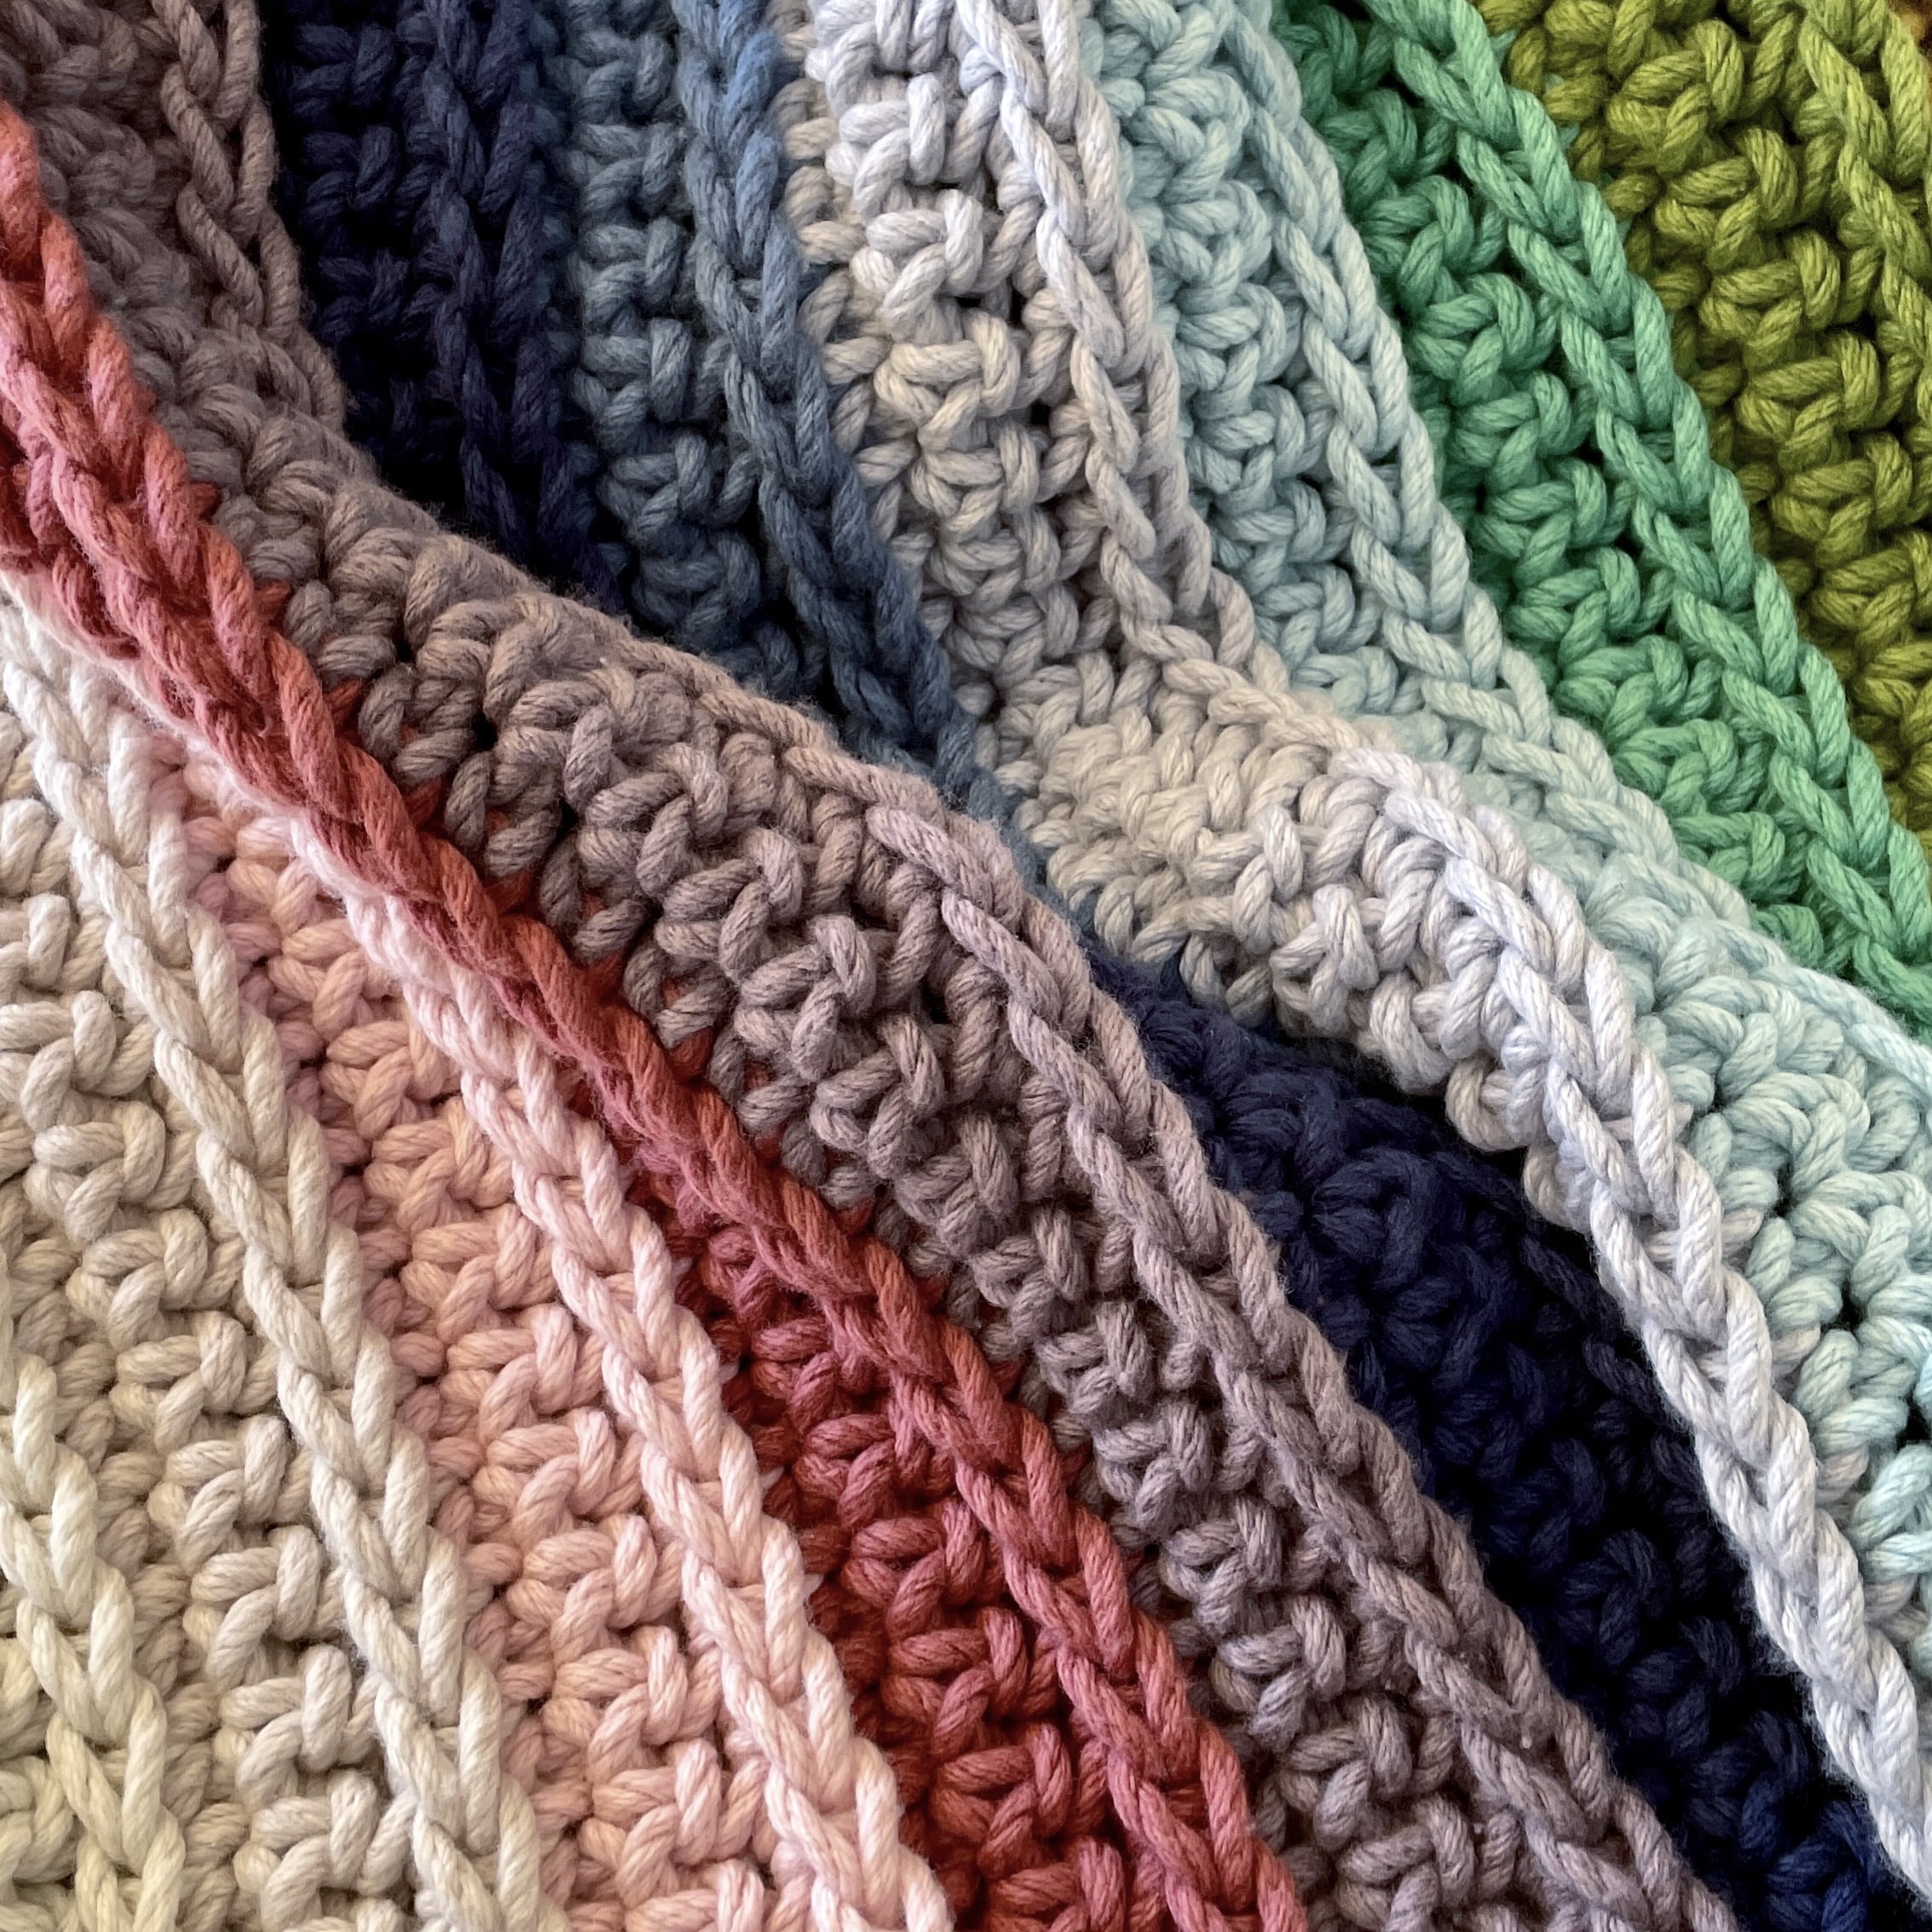 NEW: Happy Potholder Crochet Kit — Homelea Lass : Homelea Lass